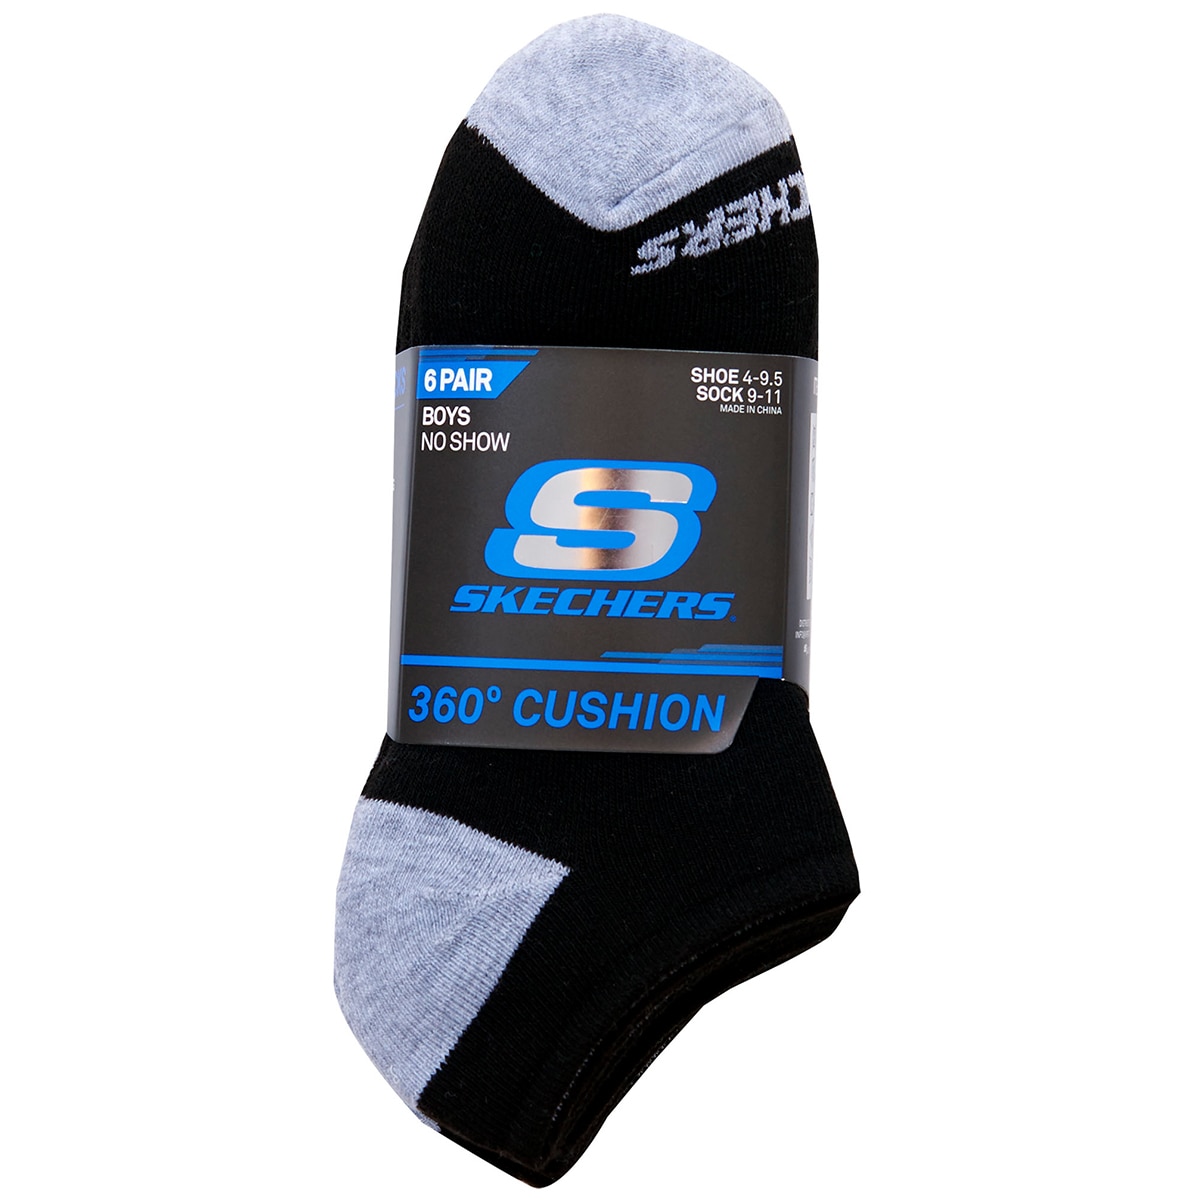 Skechers Boys' No Show Socks 6pk Black & Grey